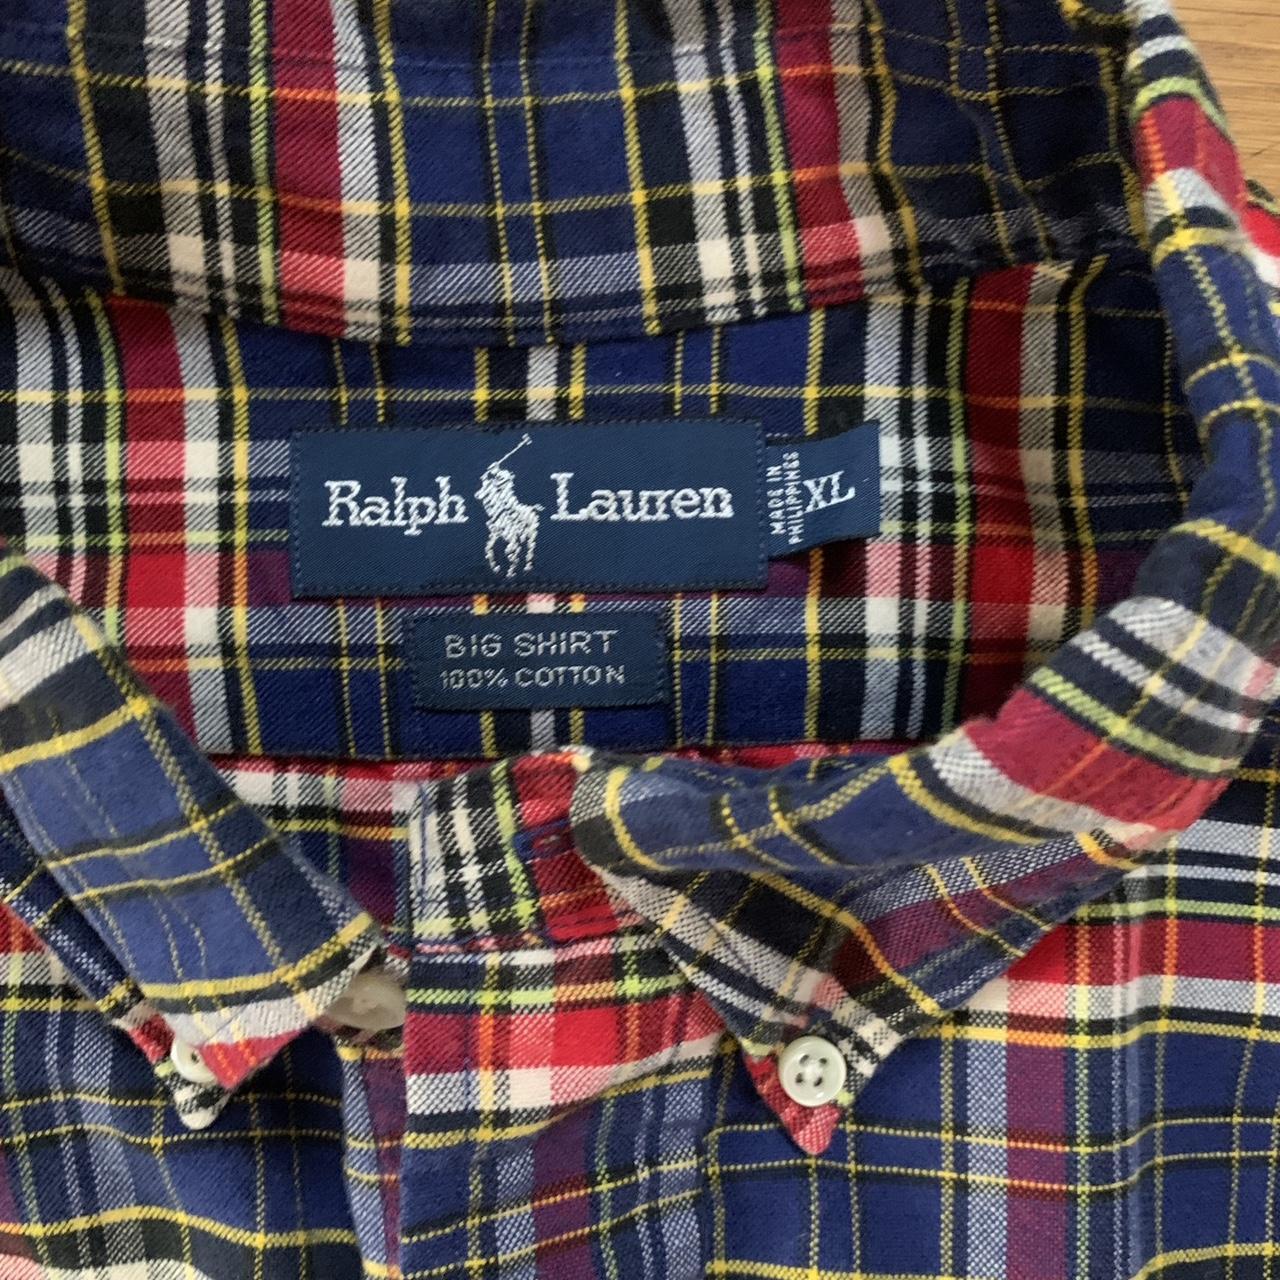 Ralph Lauren plaid Oxford cotton big shirt size XL...